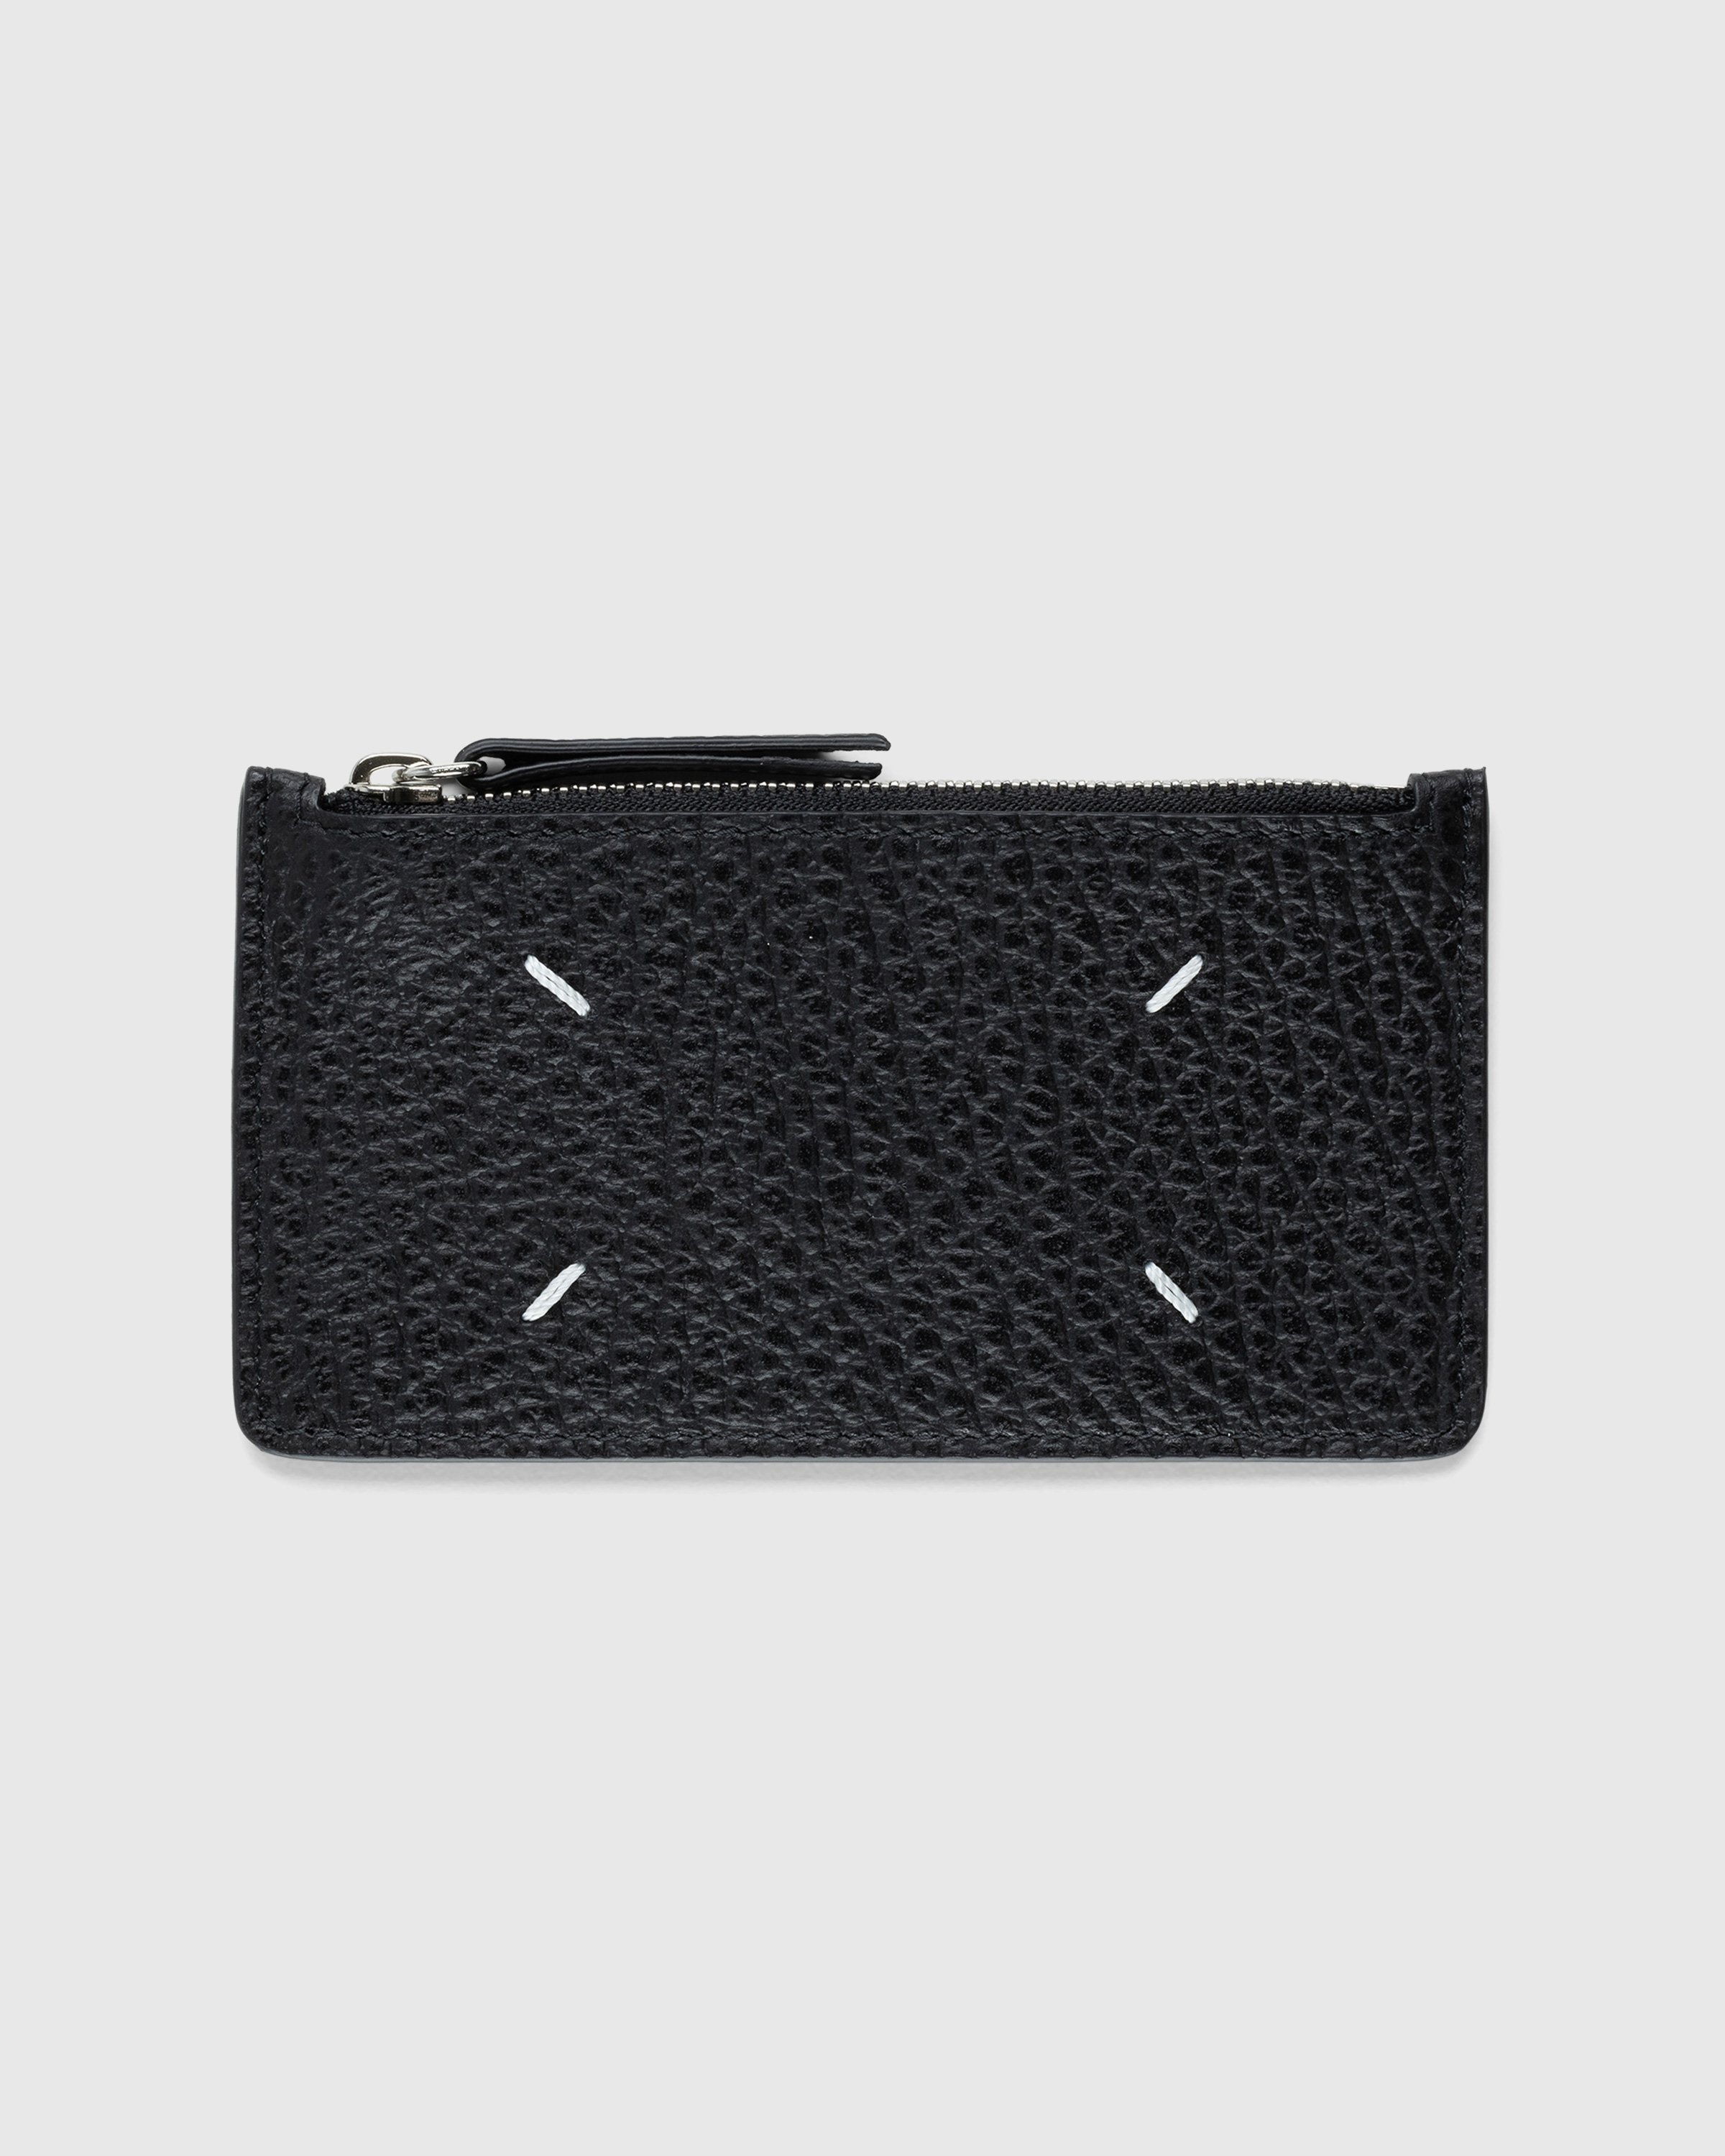 Maison Margiela - Zip Leather Card Holder Black - Accessories - Black - Image 1